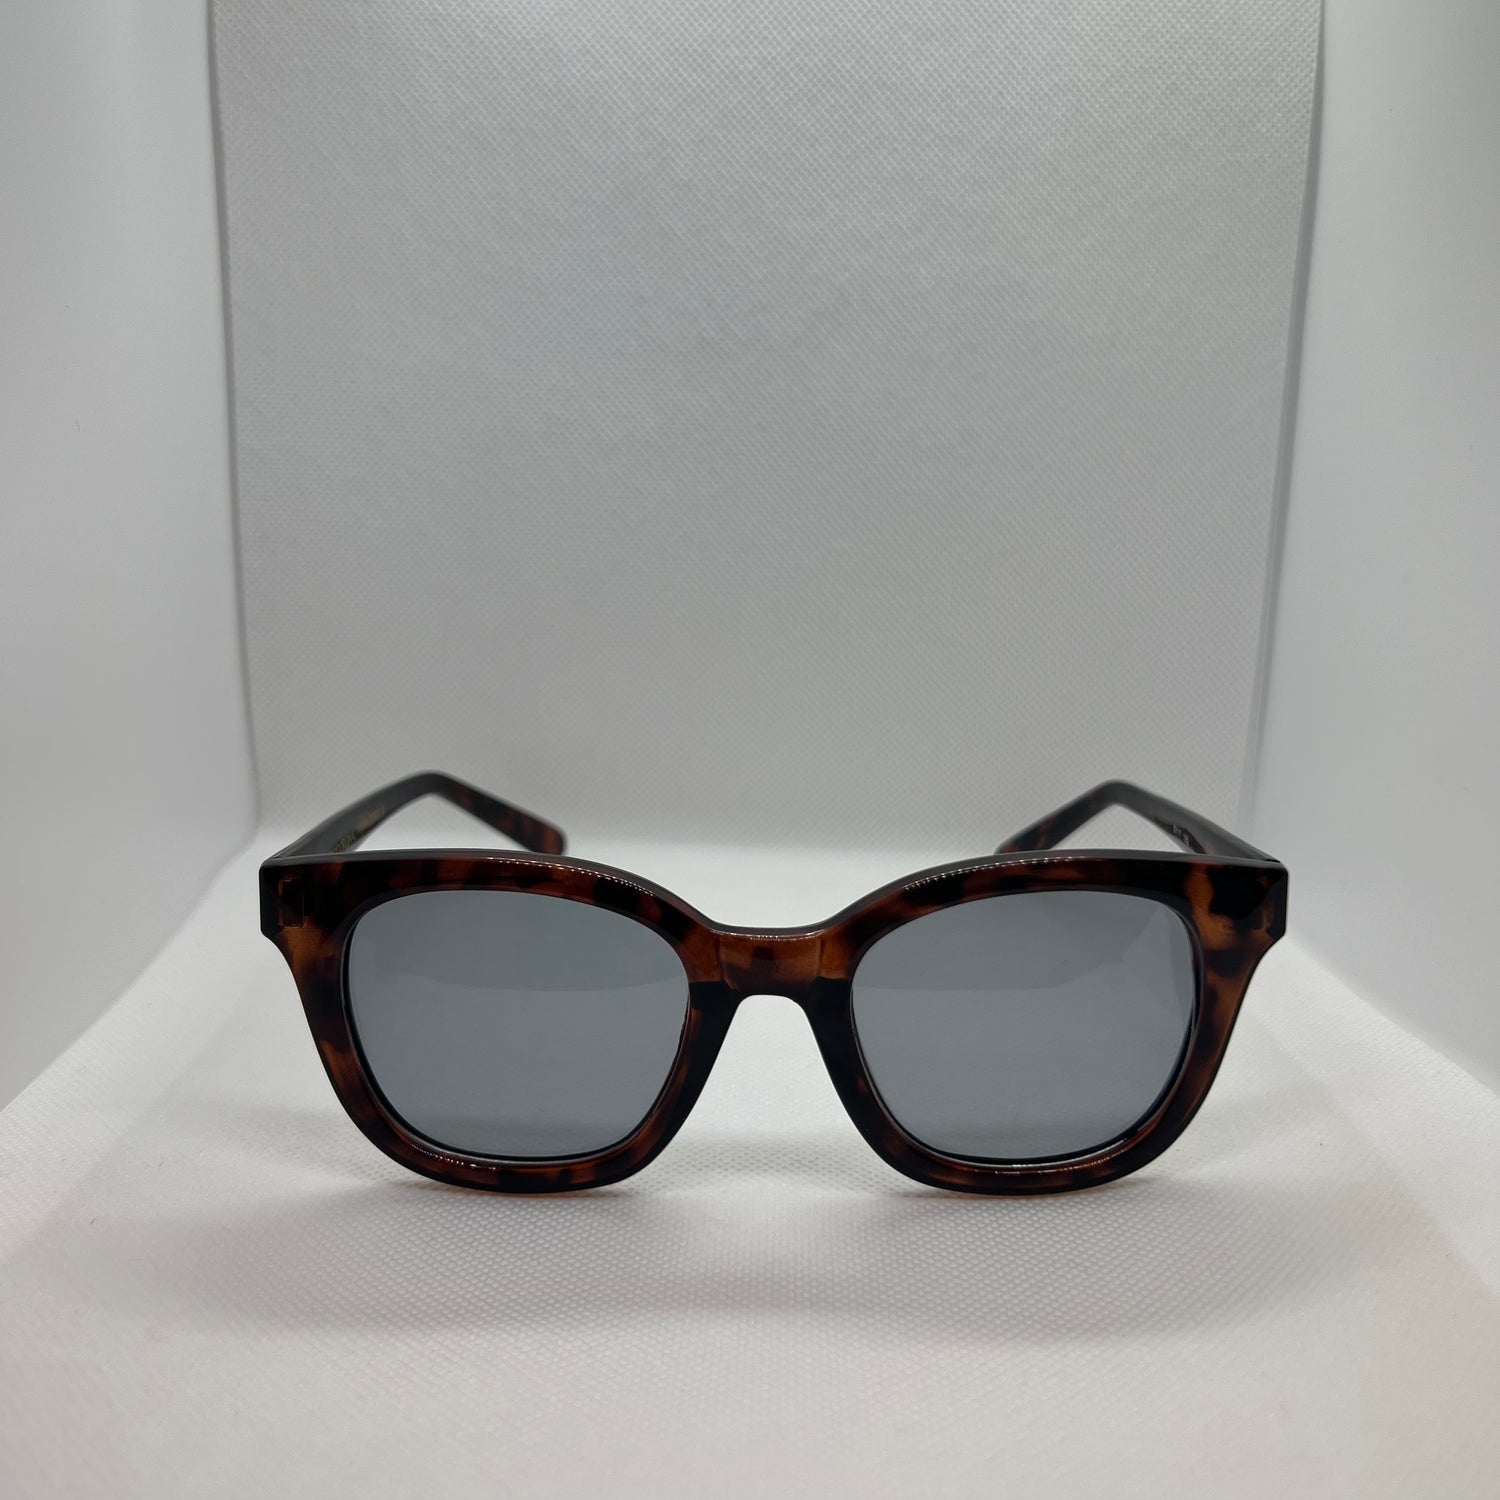 DENIS Sunglasses Bekko Camo Polarized Lenses